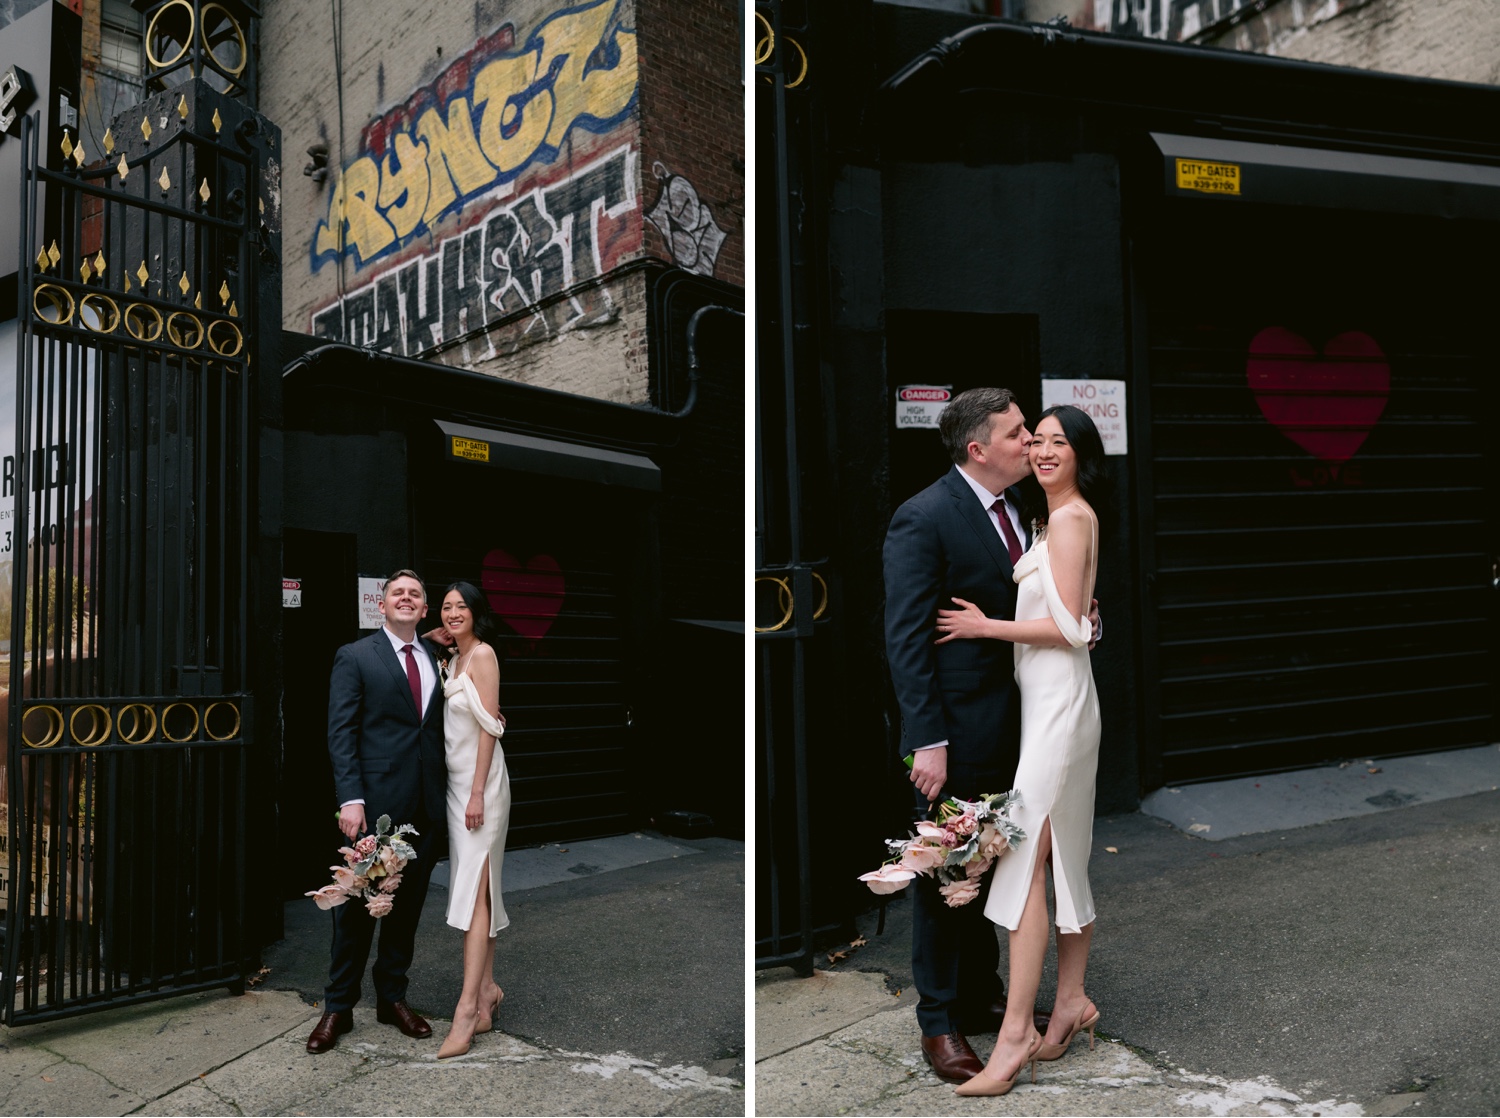 Stylish couple walking streets of NYC during wedding photos